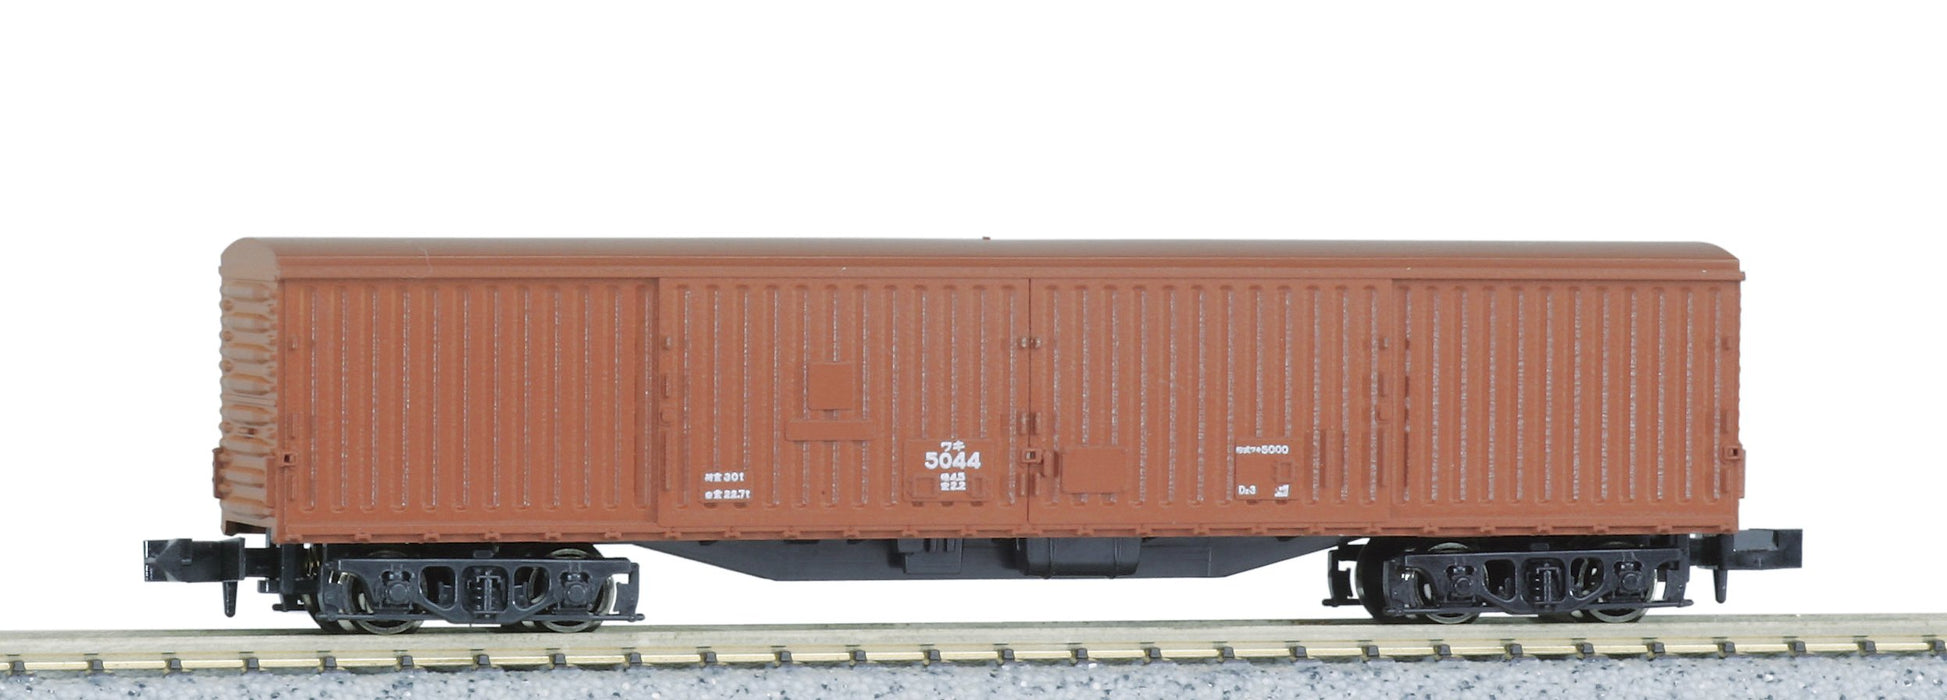 Kato N Gauge Waki5000 8010 Model Freight Car - Premium Quality Railway Toy